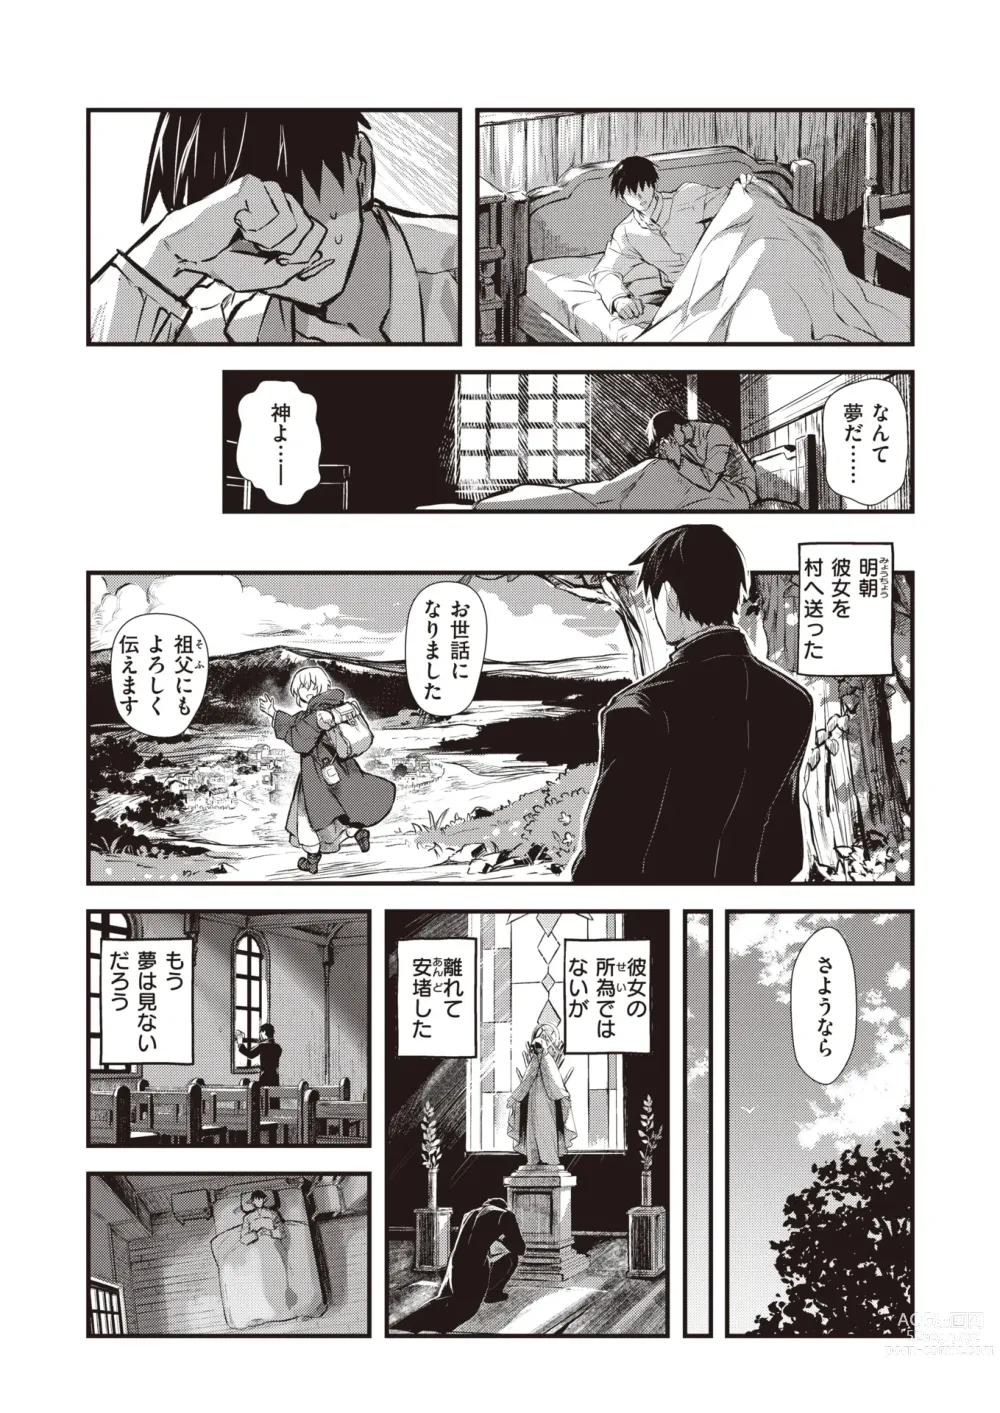 Page 8 of manga Isekai Rakuten Vol. 21